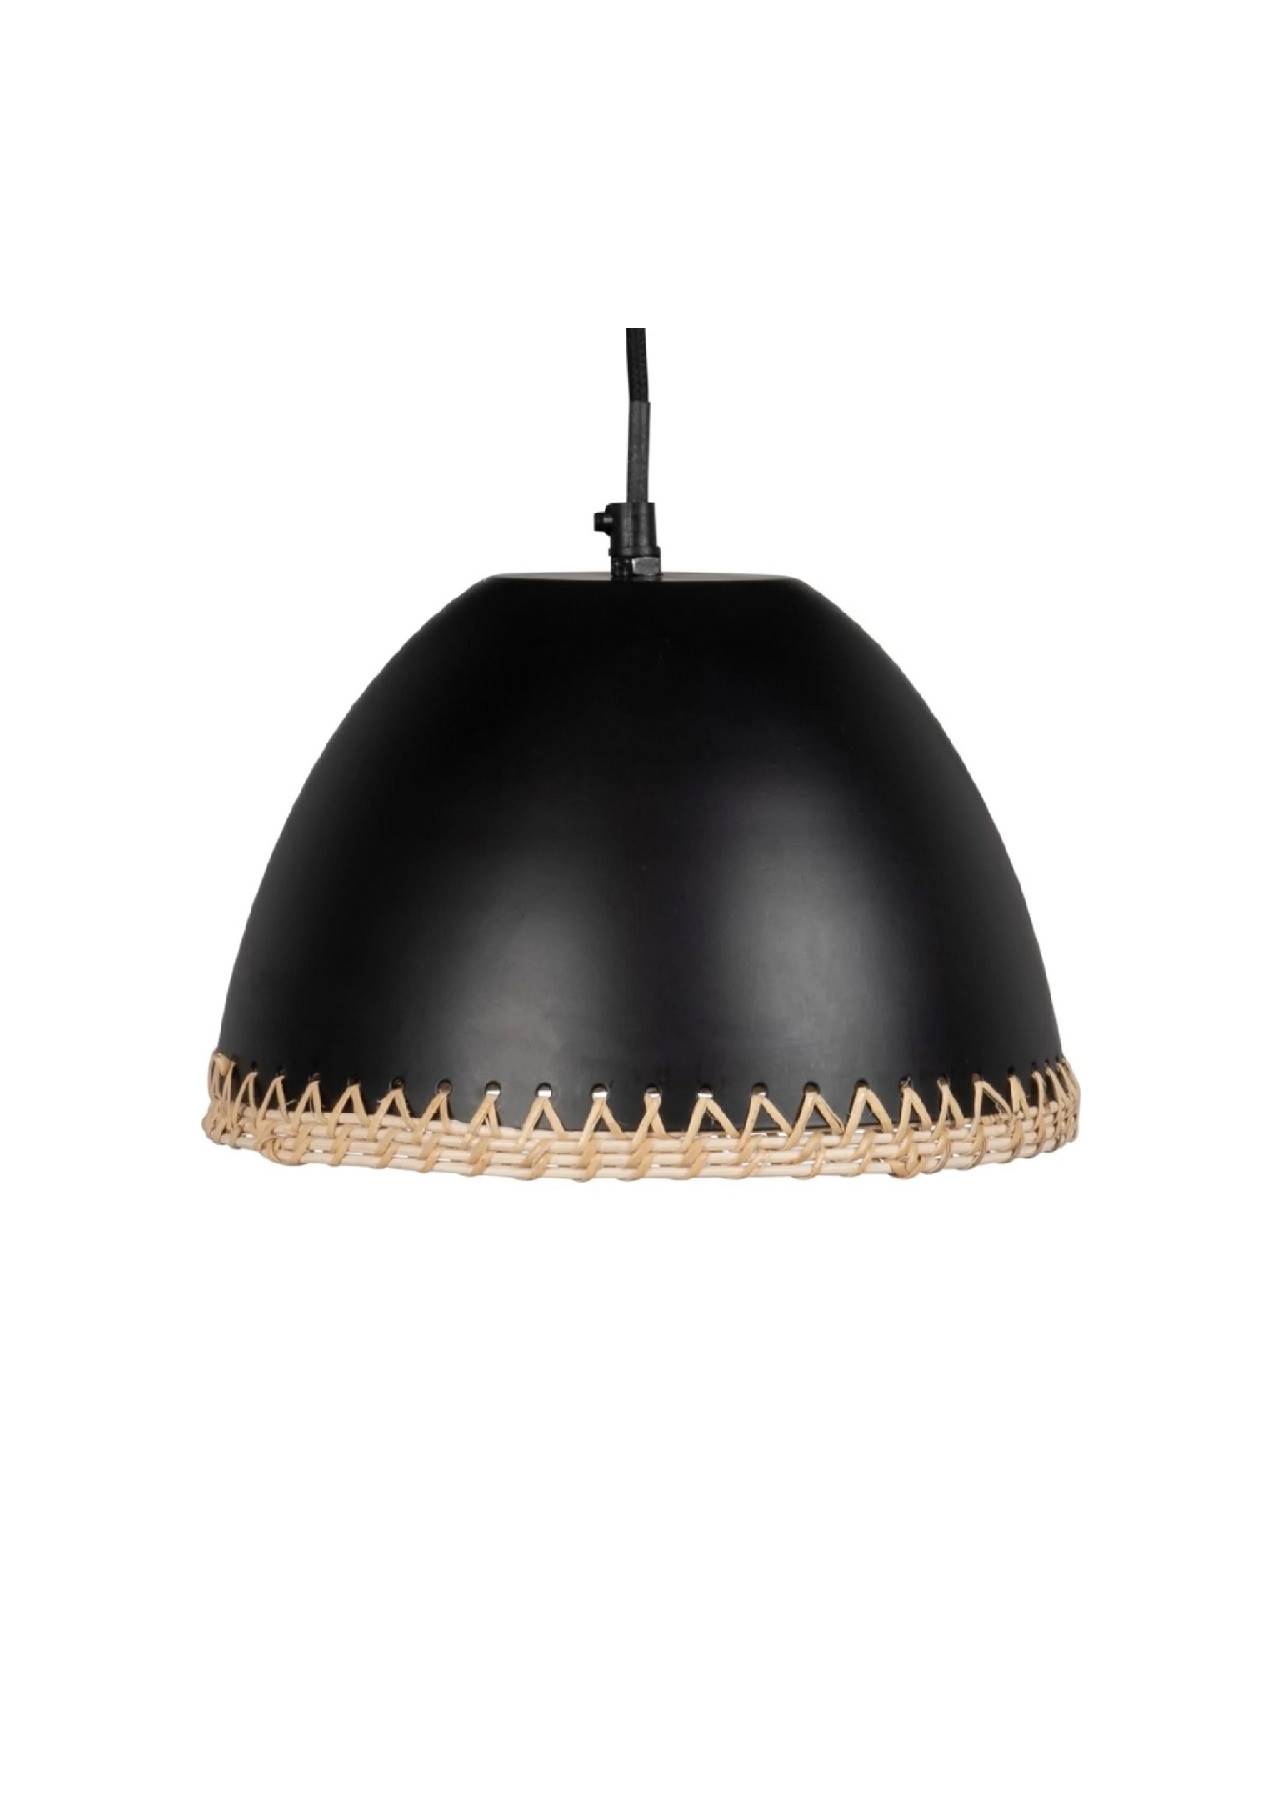 japandi lámpara de techo de metal y ratán Maisons du Monde, 39,99€